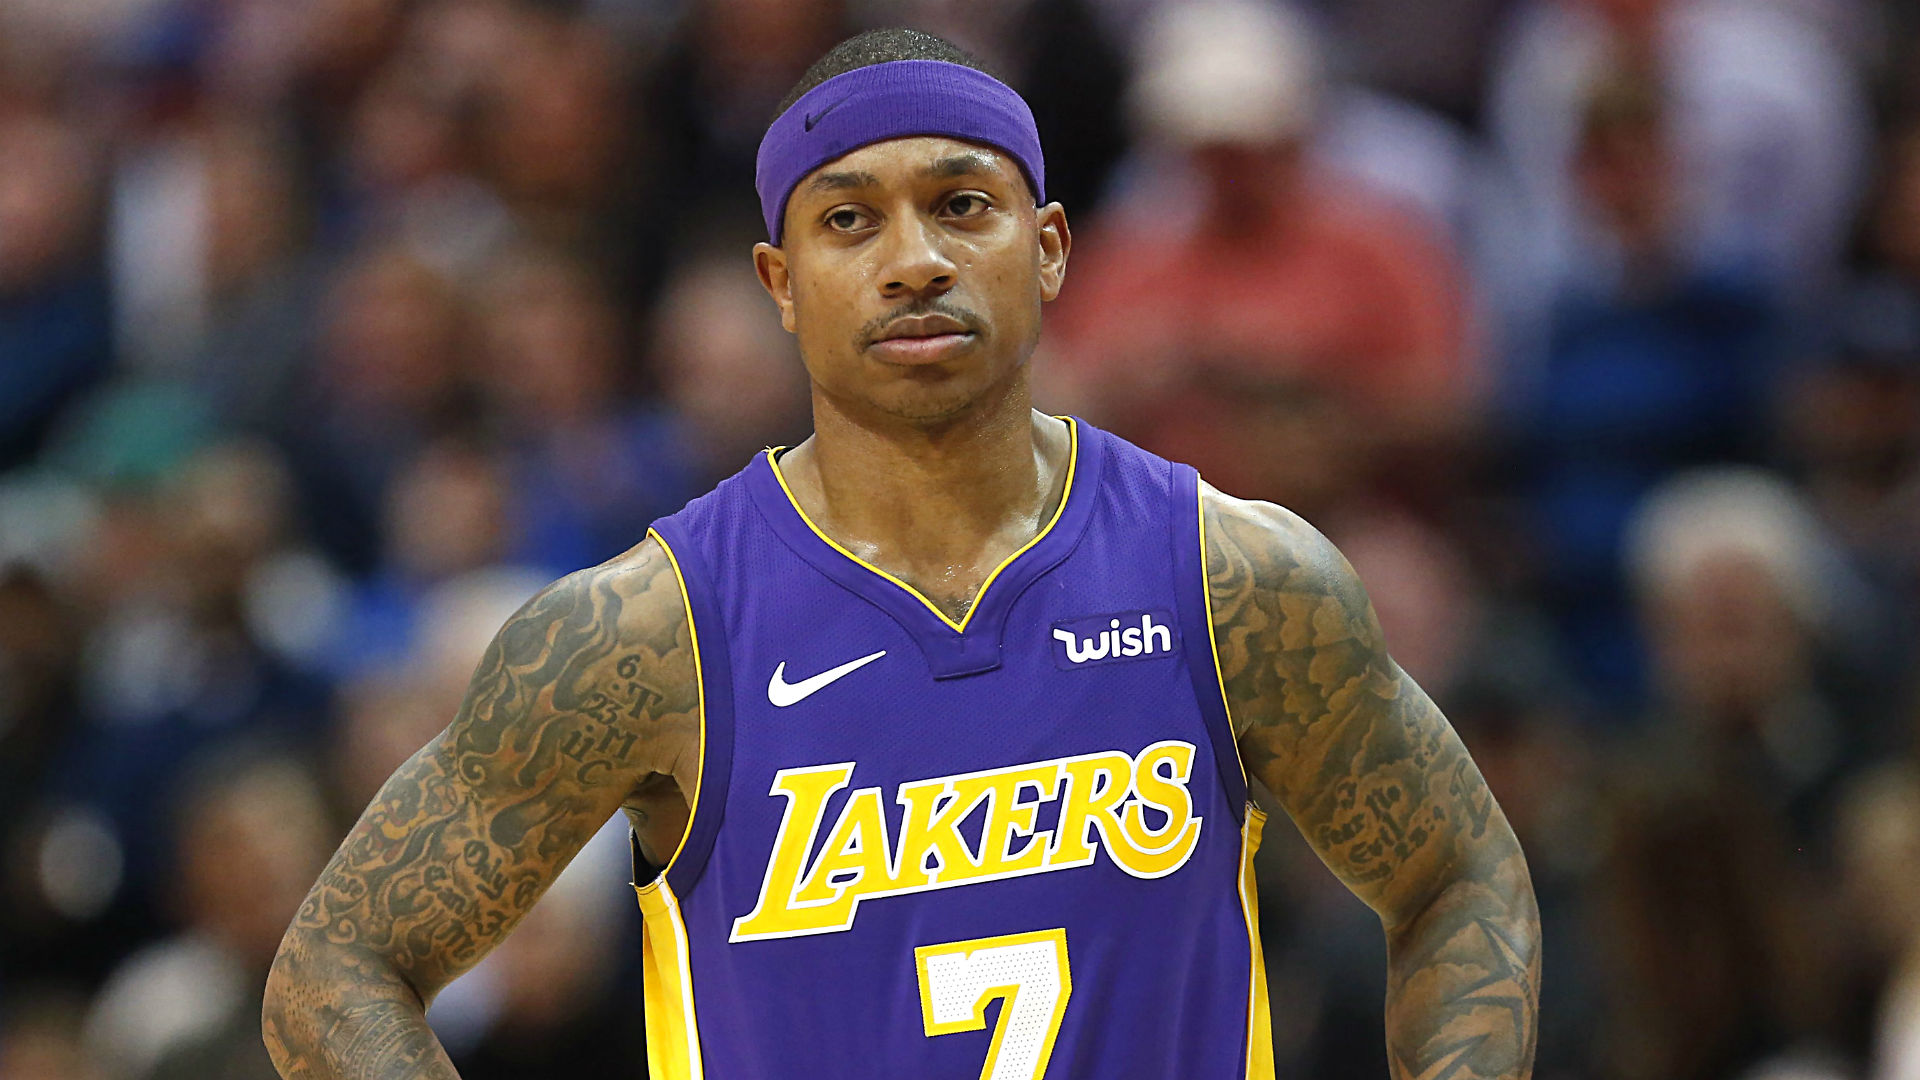 Lakers' Isaiah Thomas to undergo hip surgery | beIN SPORTS